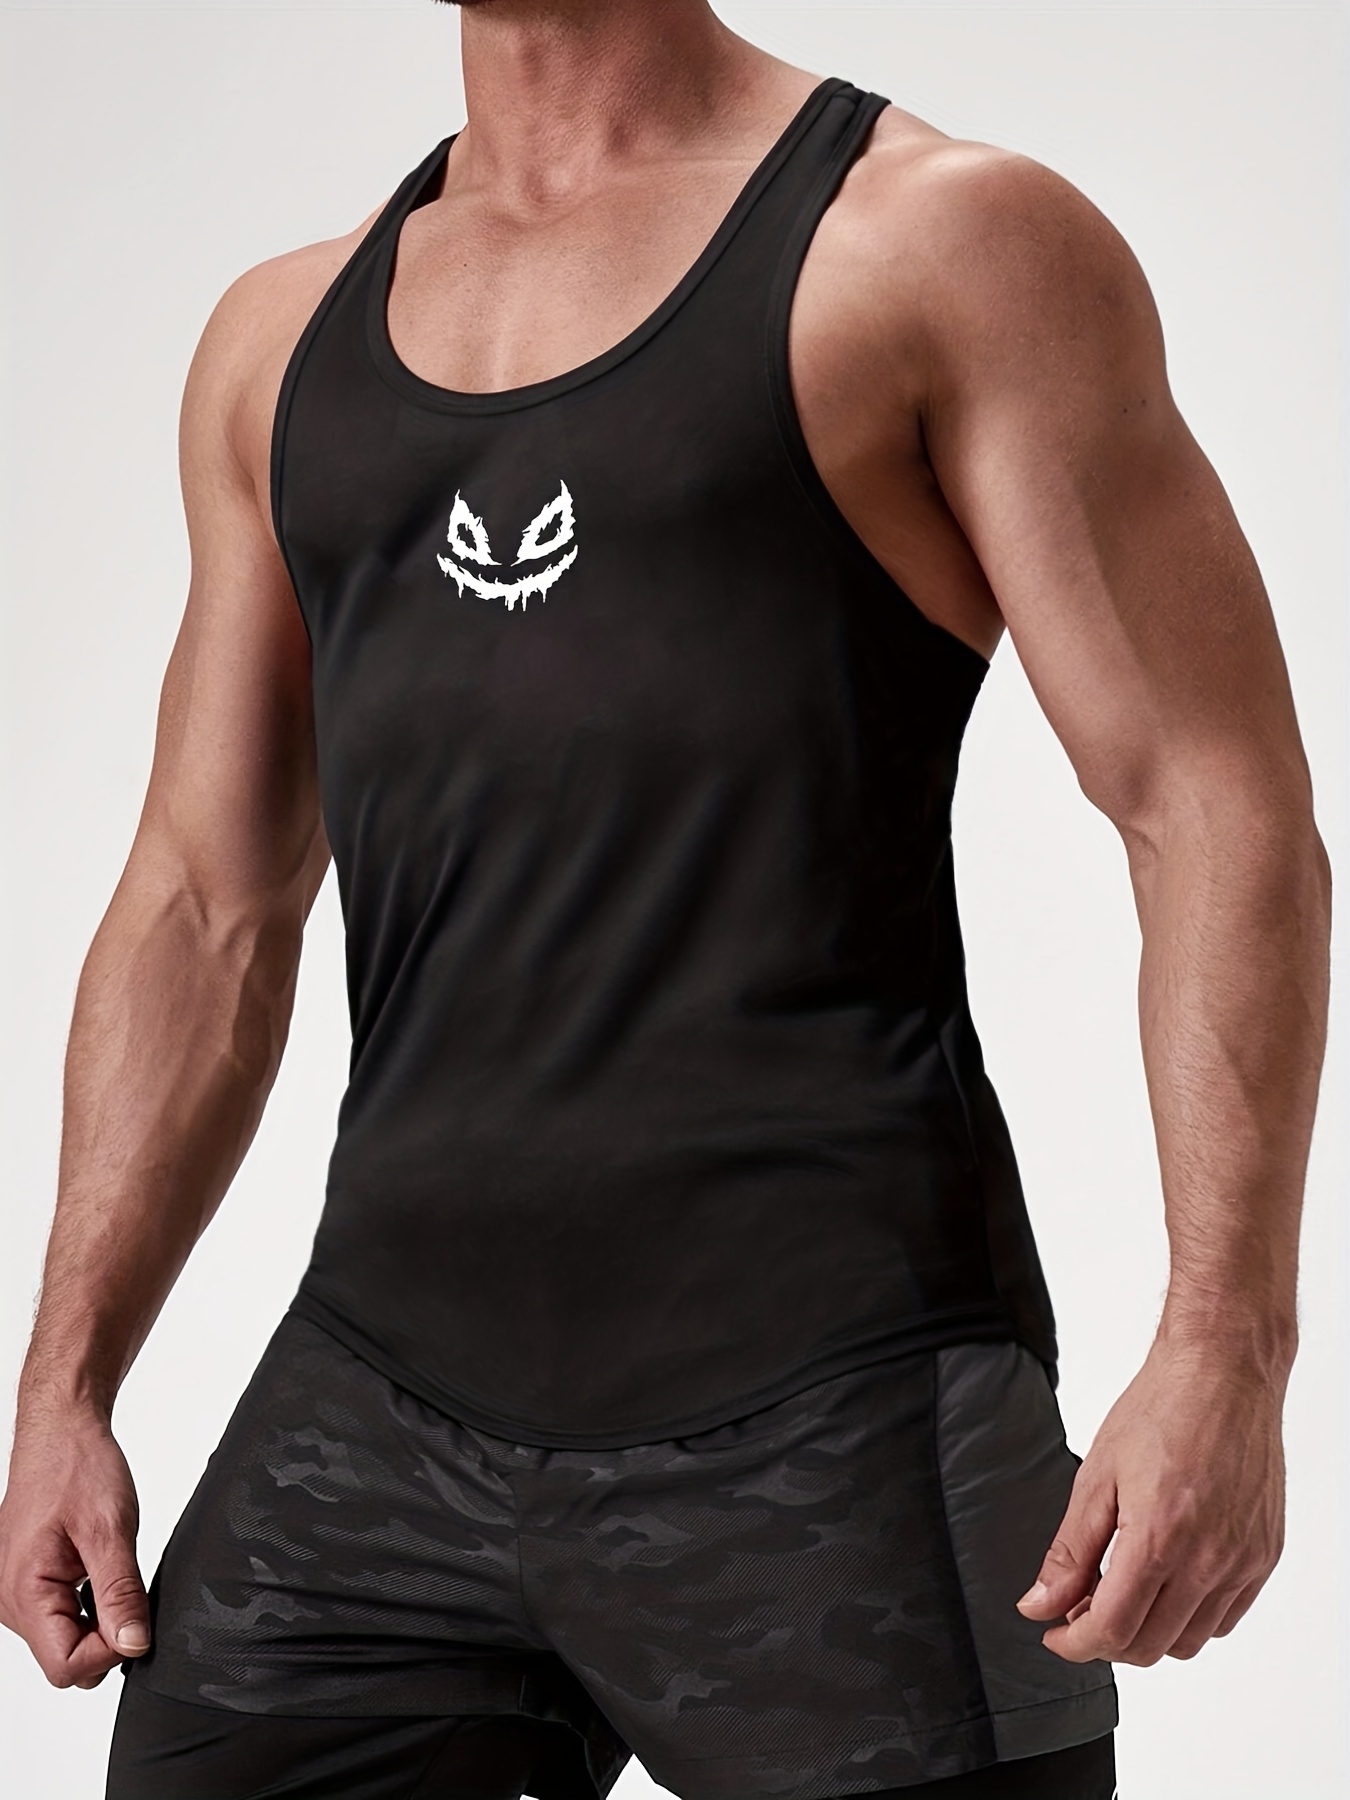 Black Gym Tank Tops Men Bodybuilding Fitness Cotton Sleeveless Shirt  Training Clothing Male Summer Casual Stringer Singlet Vest